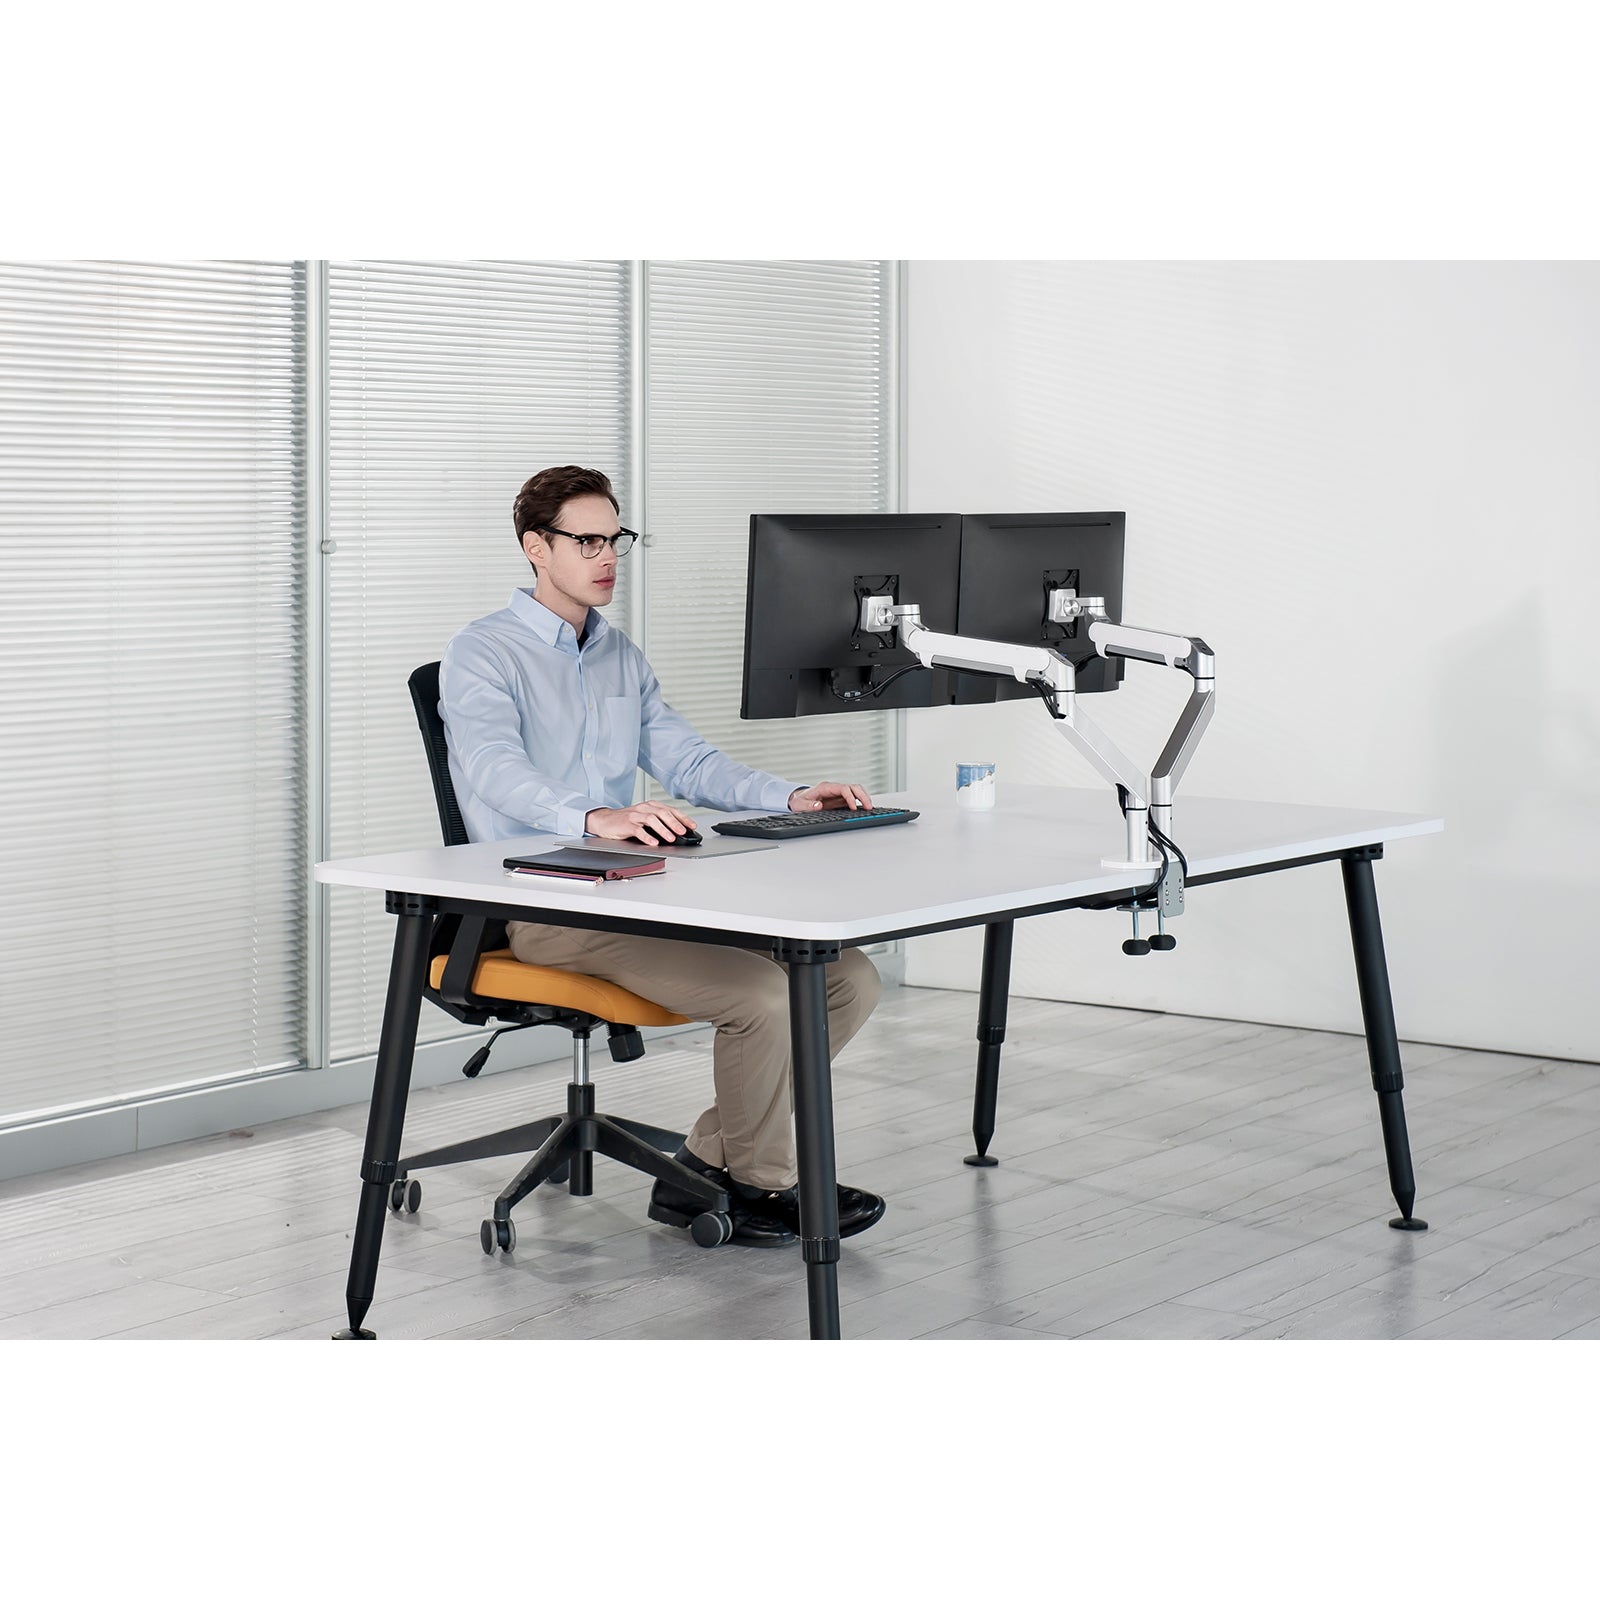 650119 13-32 Articulating Dual Arm Monitor Laptop Desk Mount Bracket -  Equip